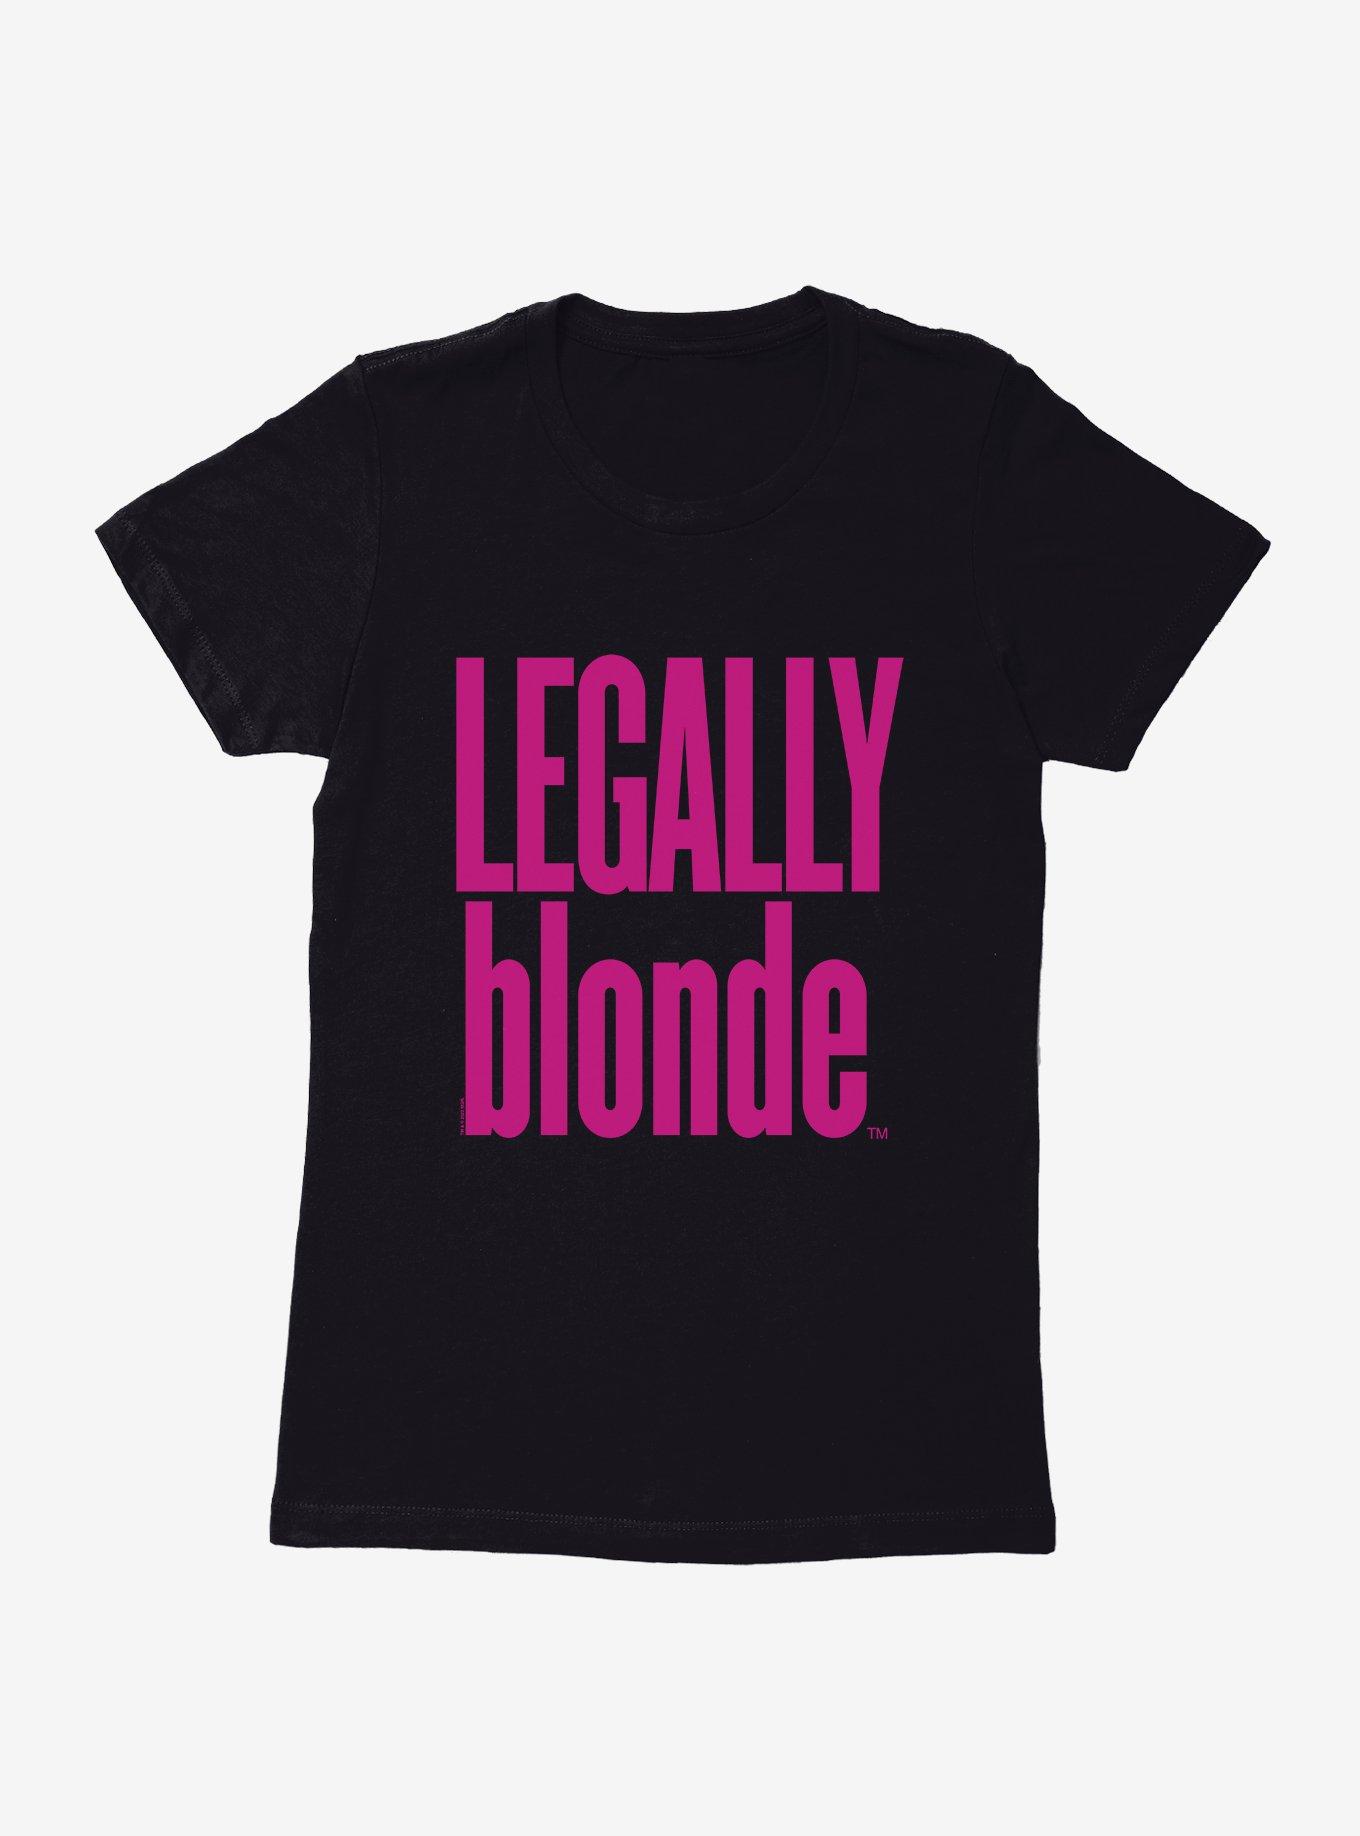 Legally Blonde Title Logo Womens T-Shirt, , hi-res